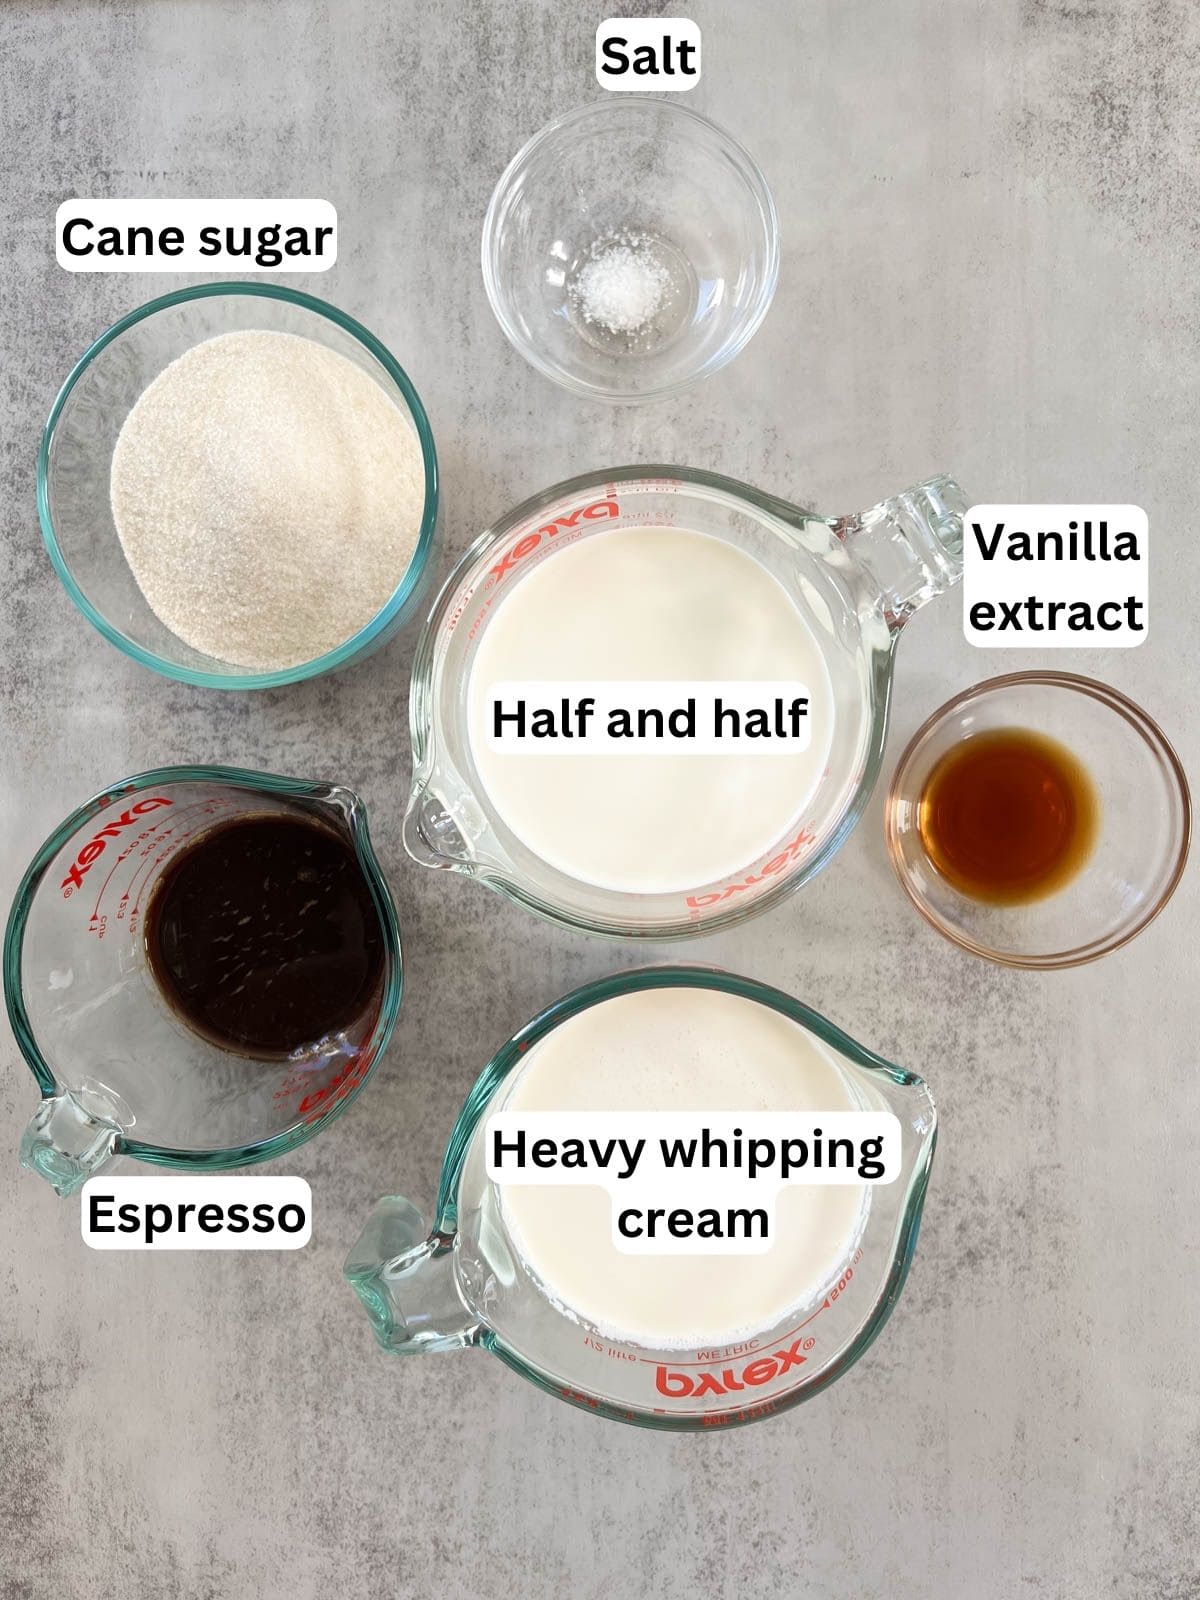 The ingredients to make espresso ice cream.